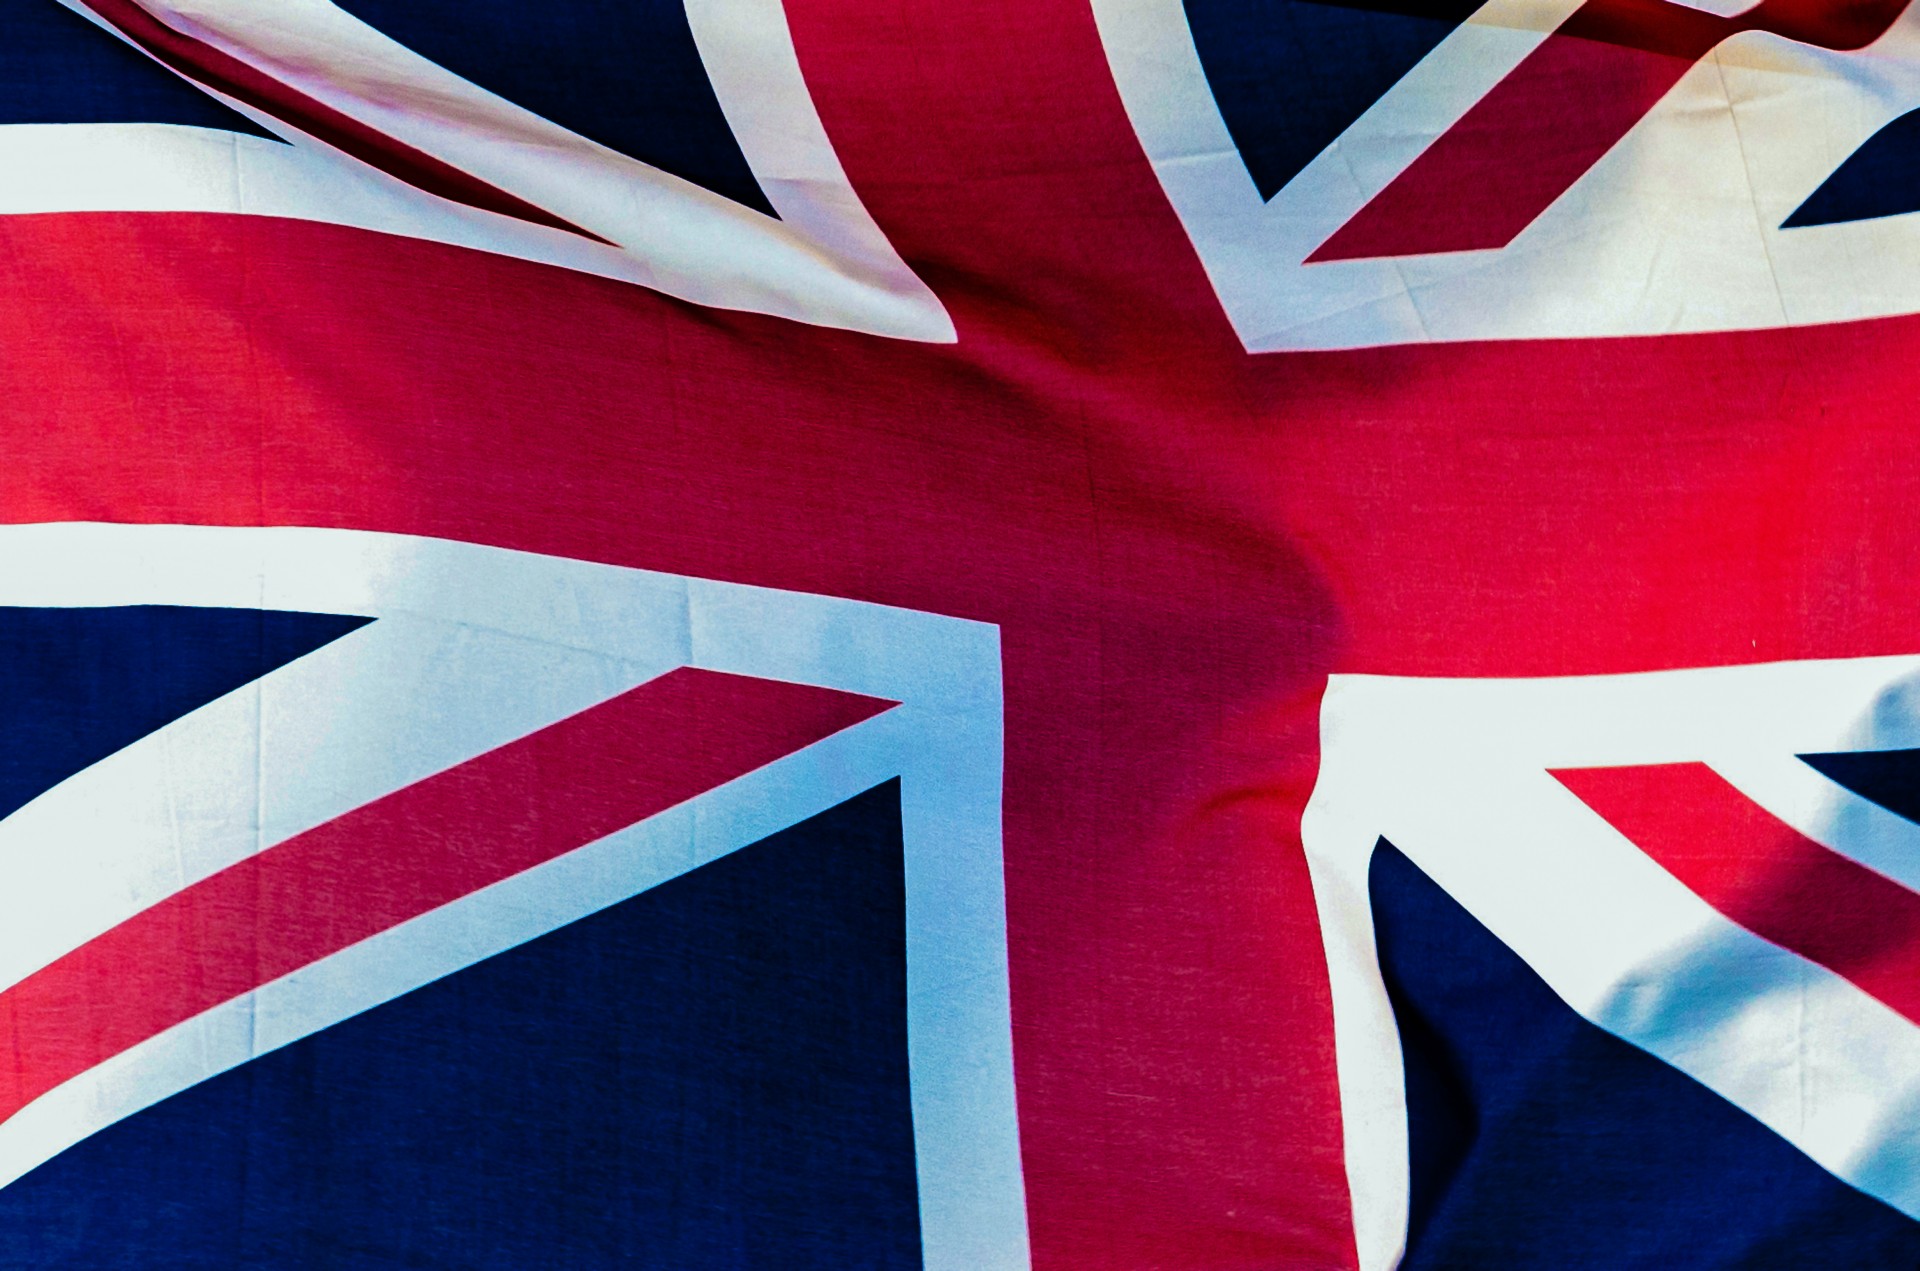 British Flag Free Stock Photo - Public Domain Pictures